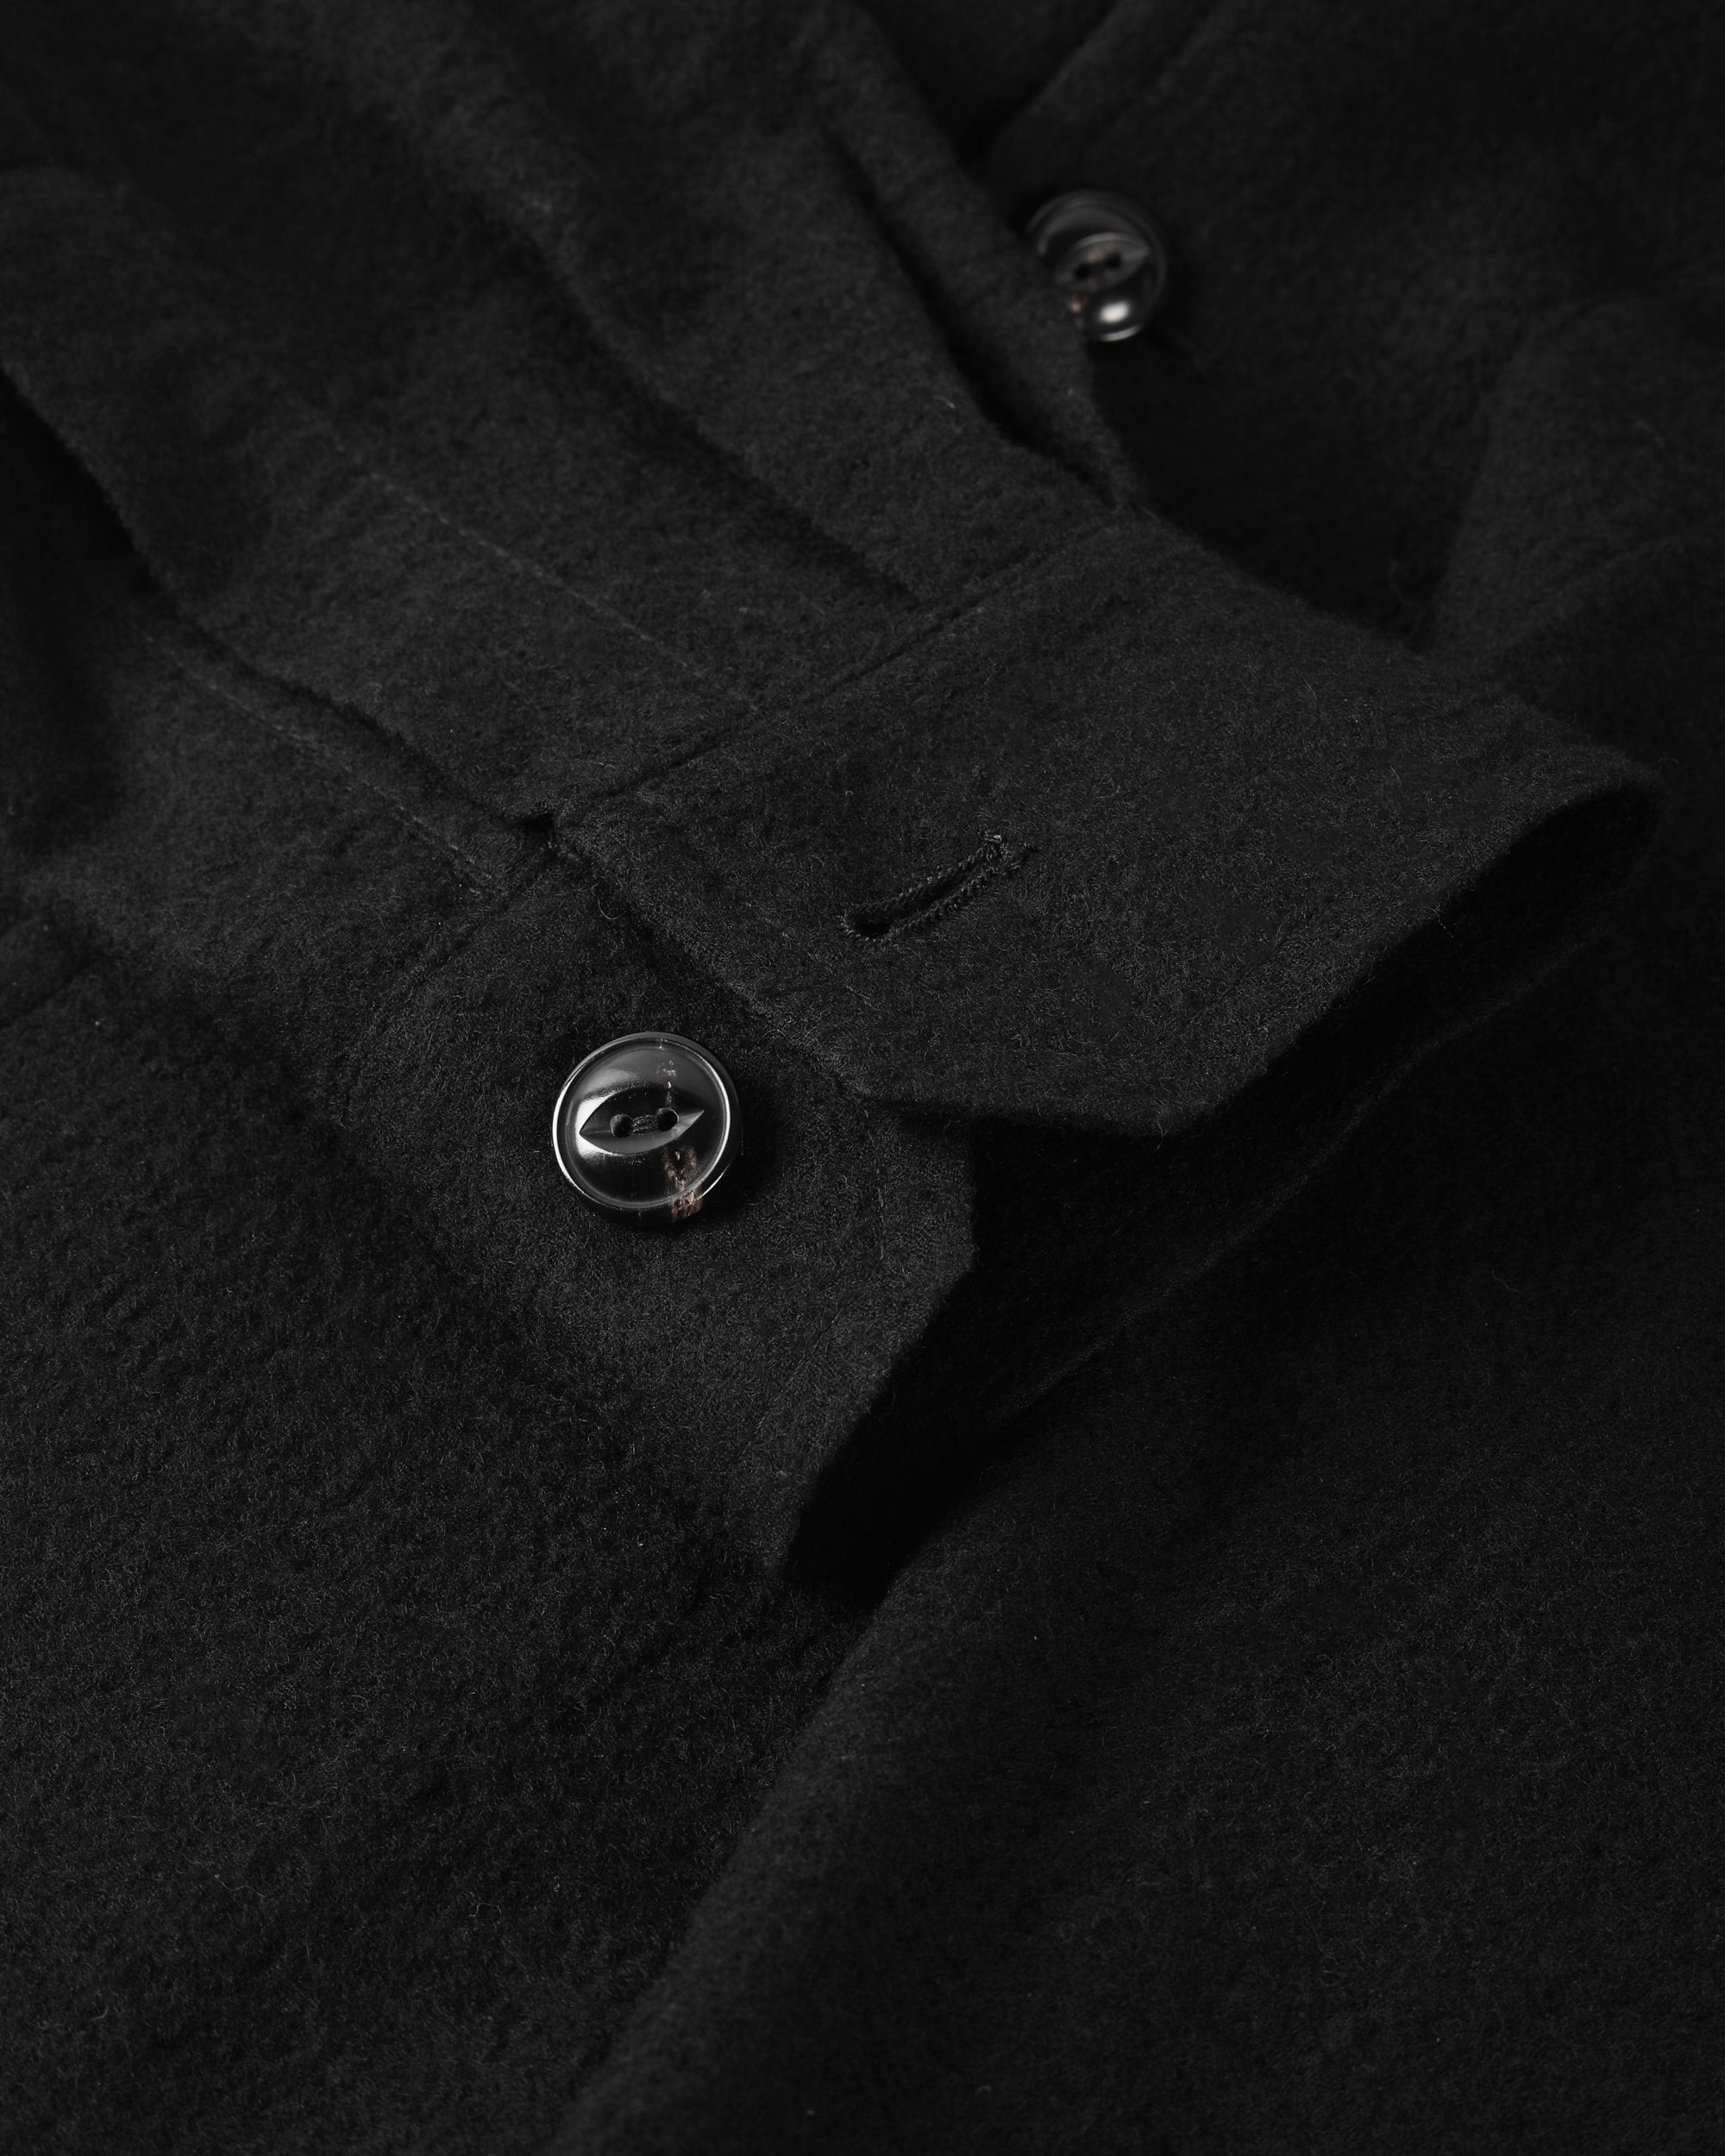 ROSEN Plato Shirt in Wool Cotton Gauze